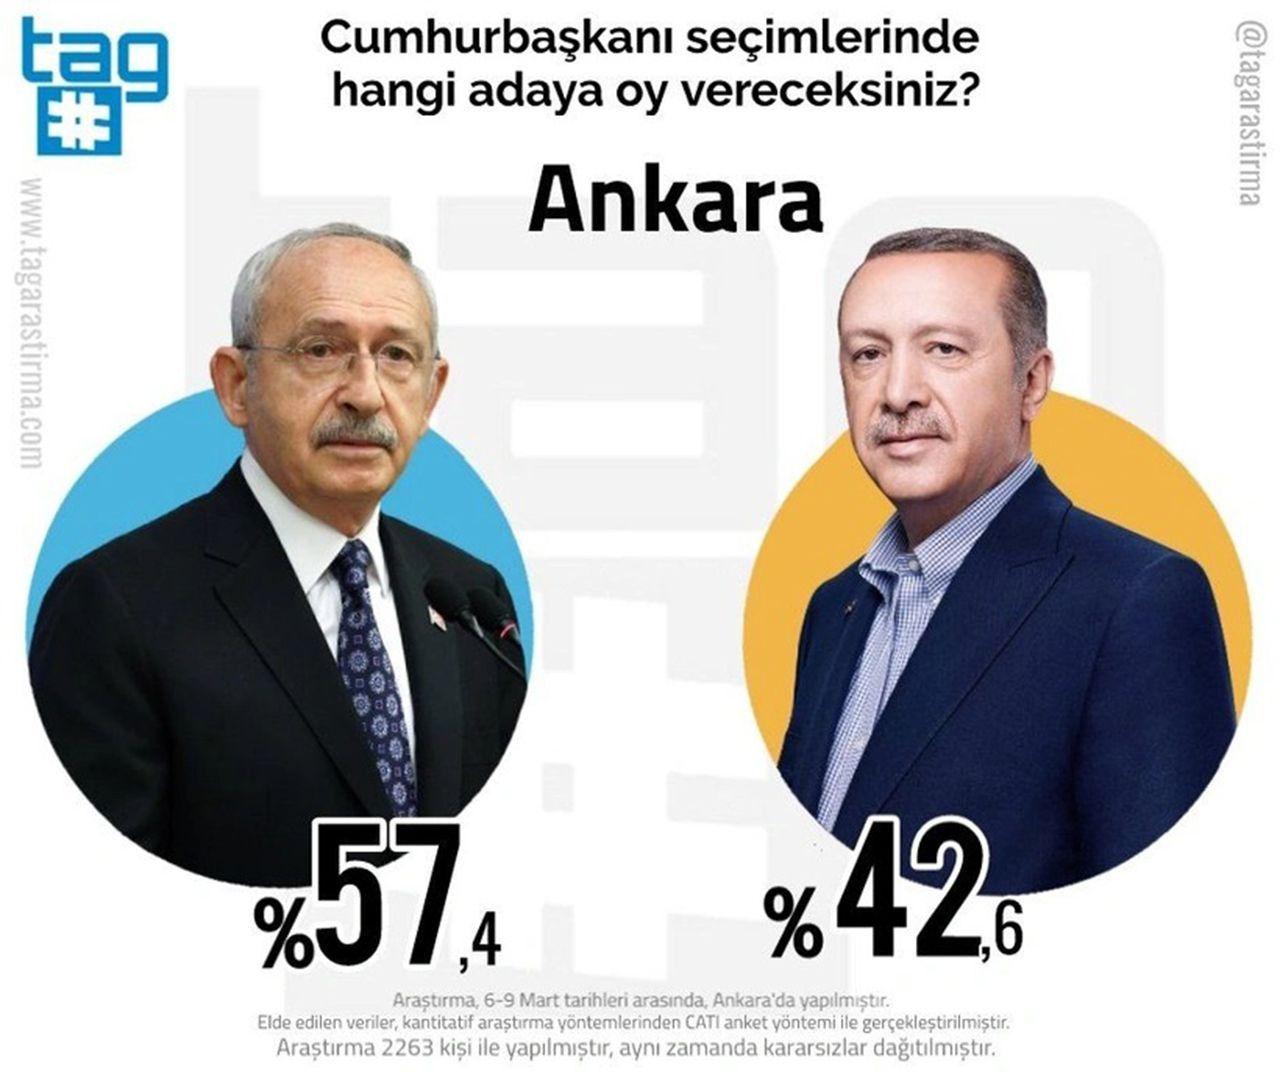 İl il Cumhurbaşkanlığı seçimi anketi sonuçları açıklandı - Resim: 4